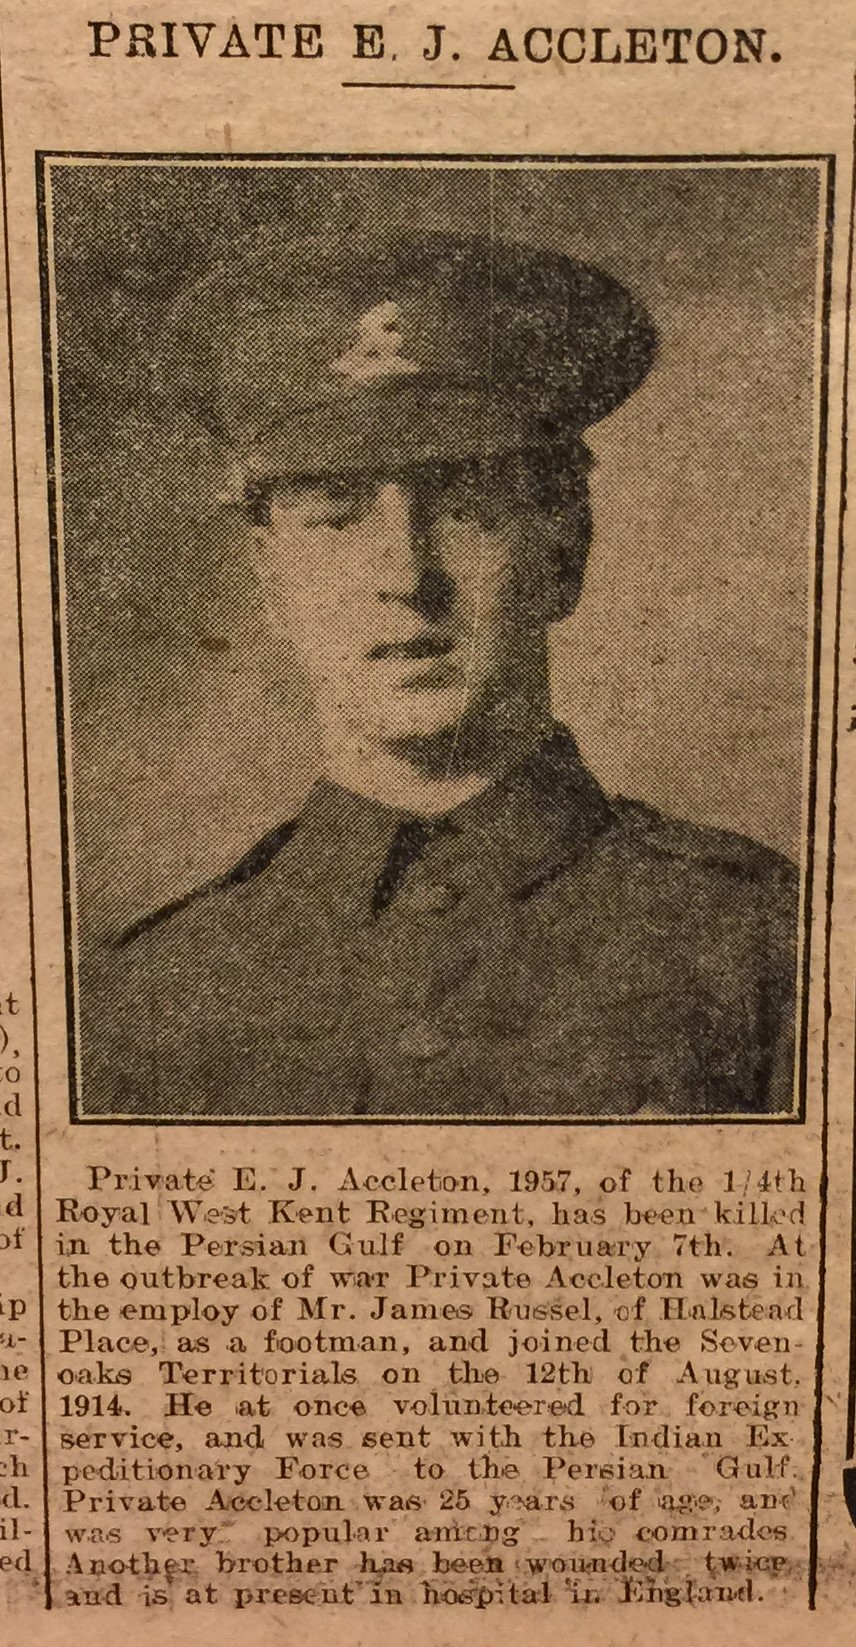 Private Ernest John Accleton full newspaper report